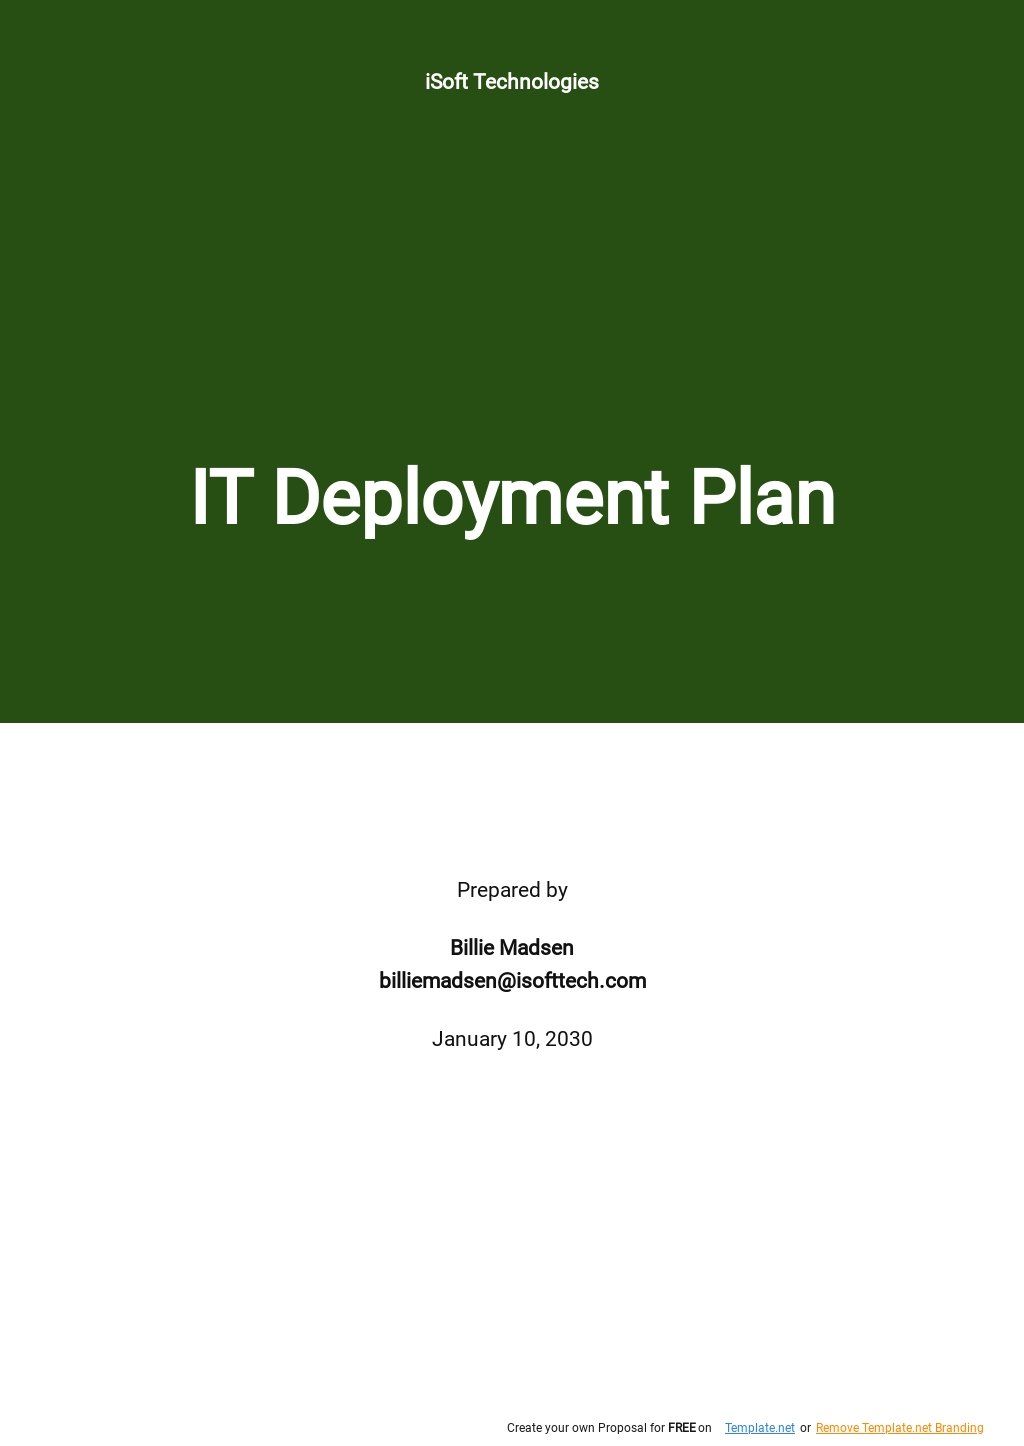 IT Deployment Plan Template